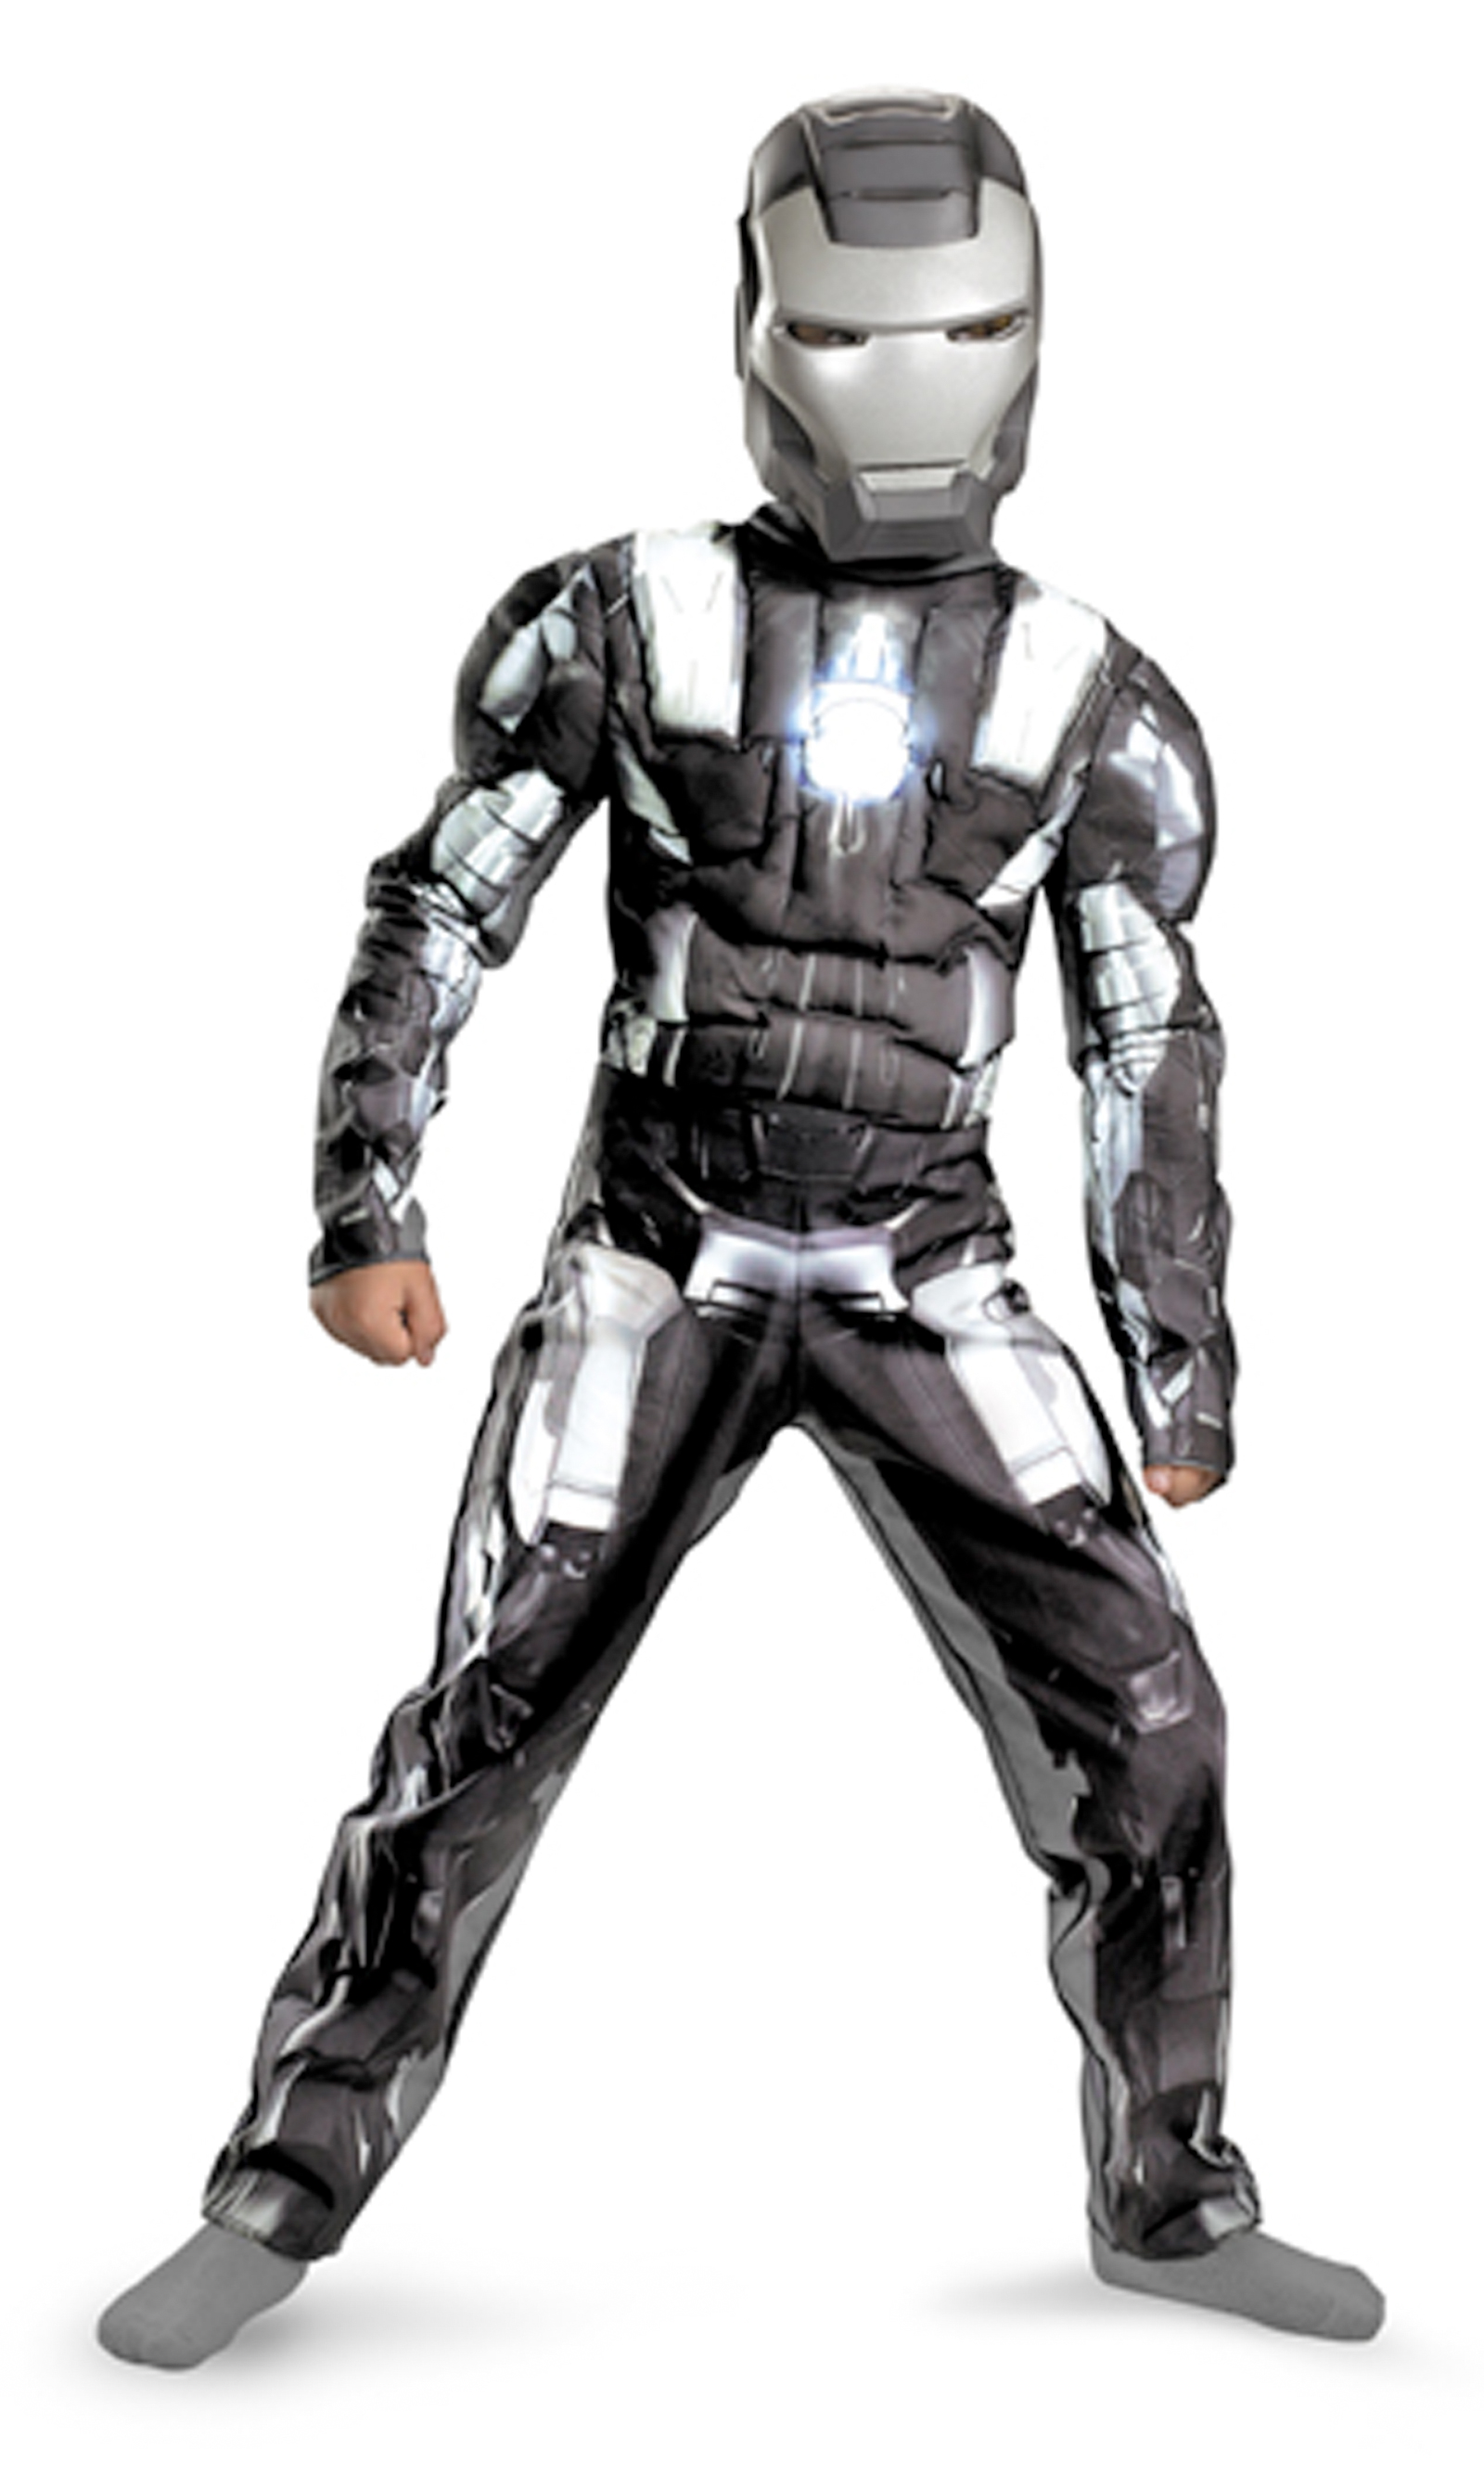 Iron Man Suit For Sale